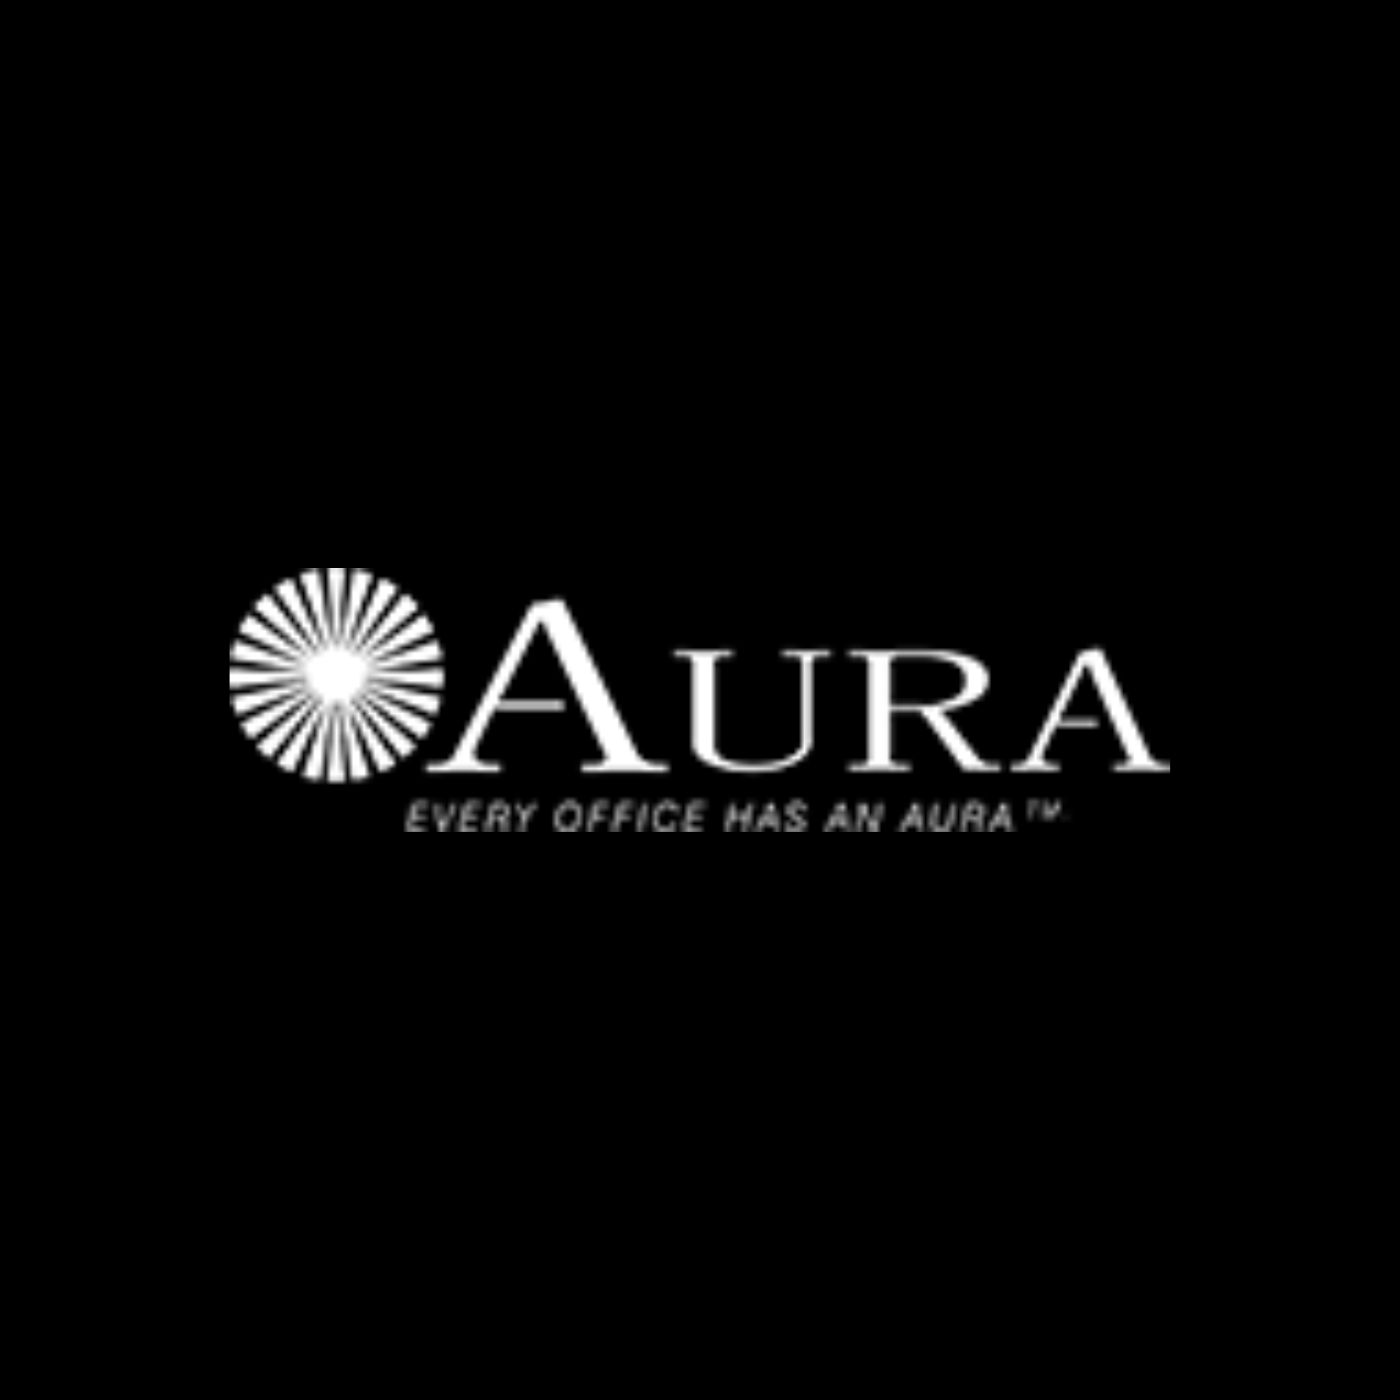 Aura Office Environments